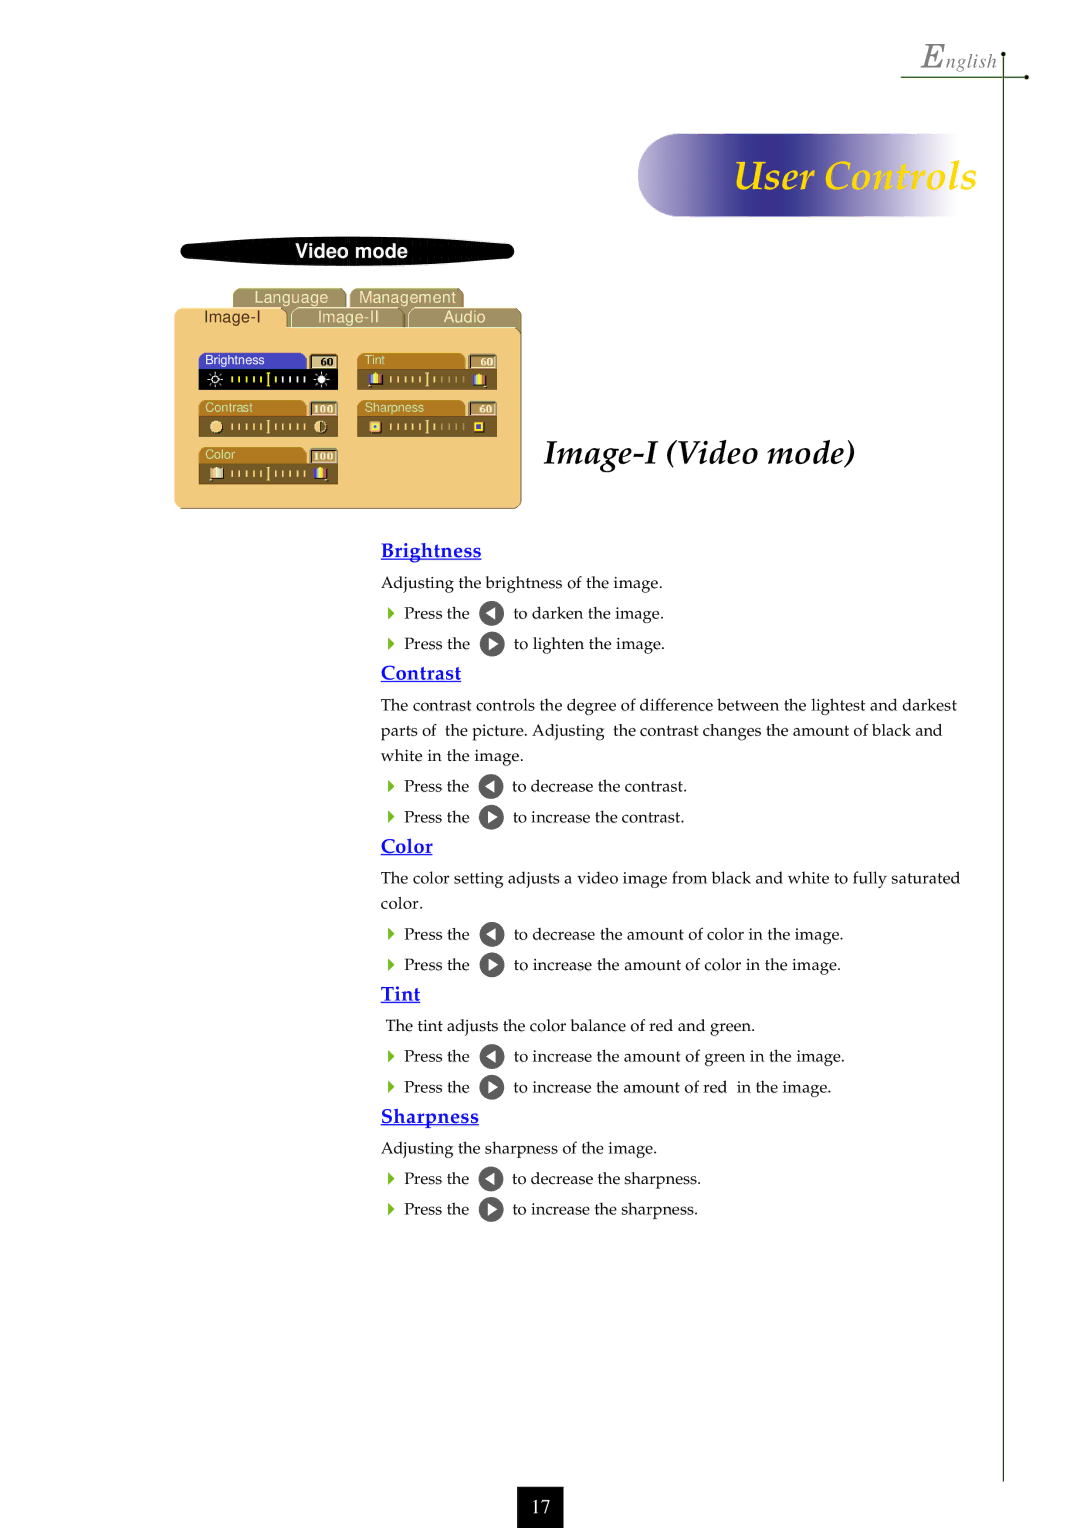 Optoma Technology EP753, EP755 manual Image-I Video mode, Color, Tint, Sharpness 